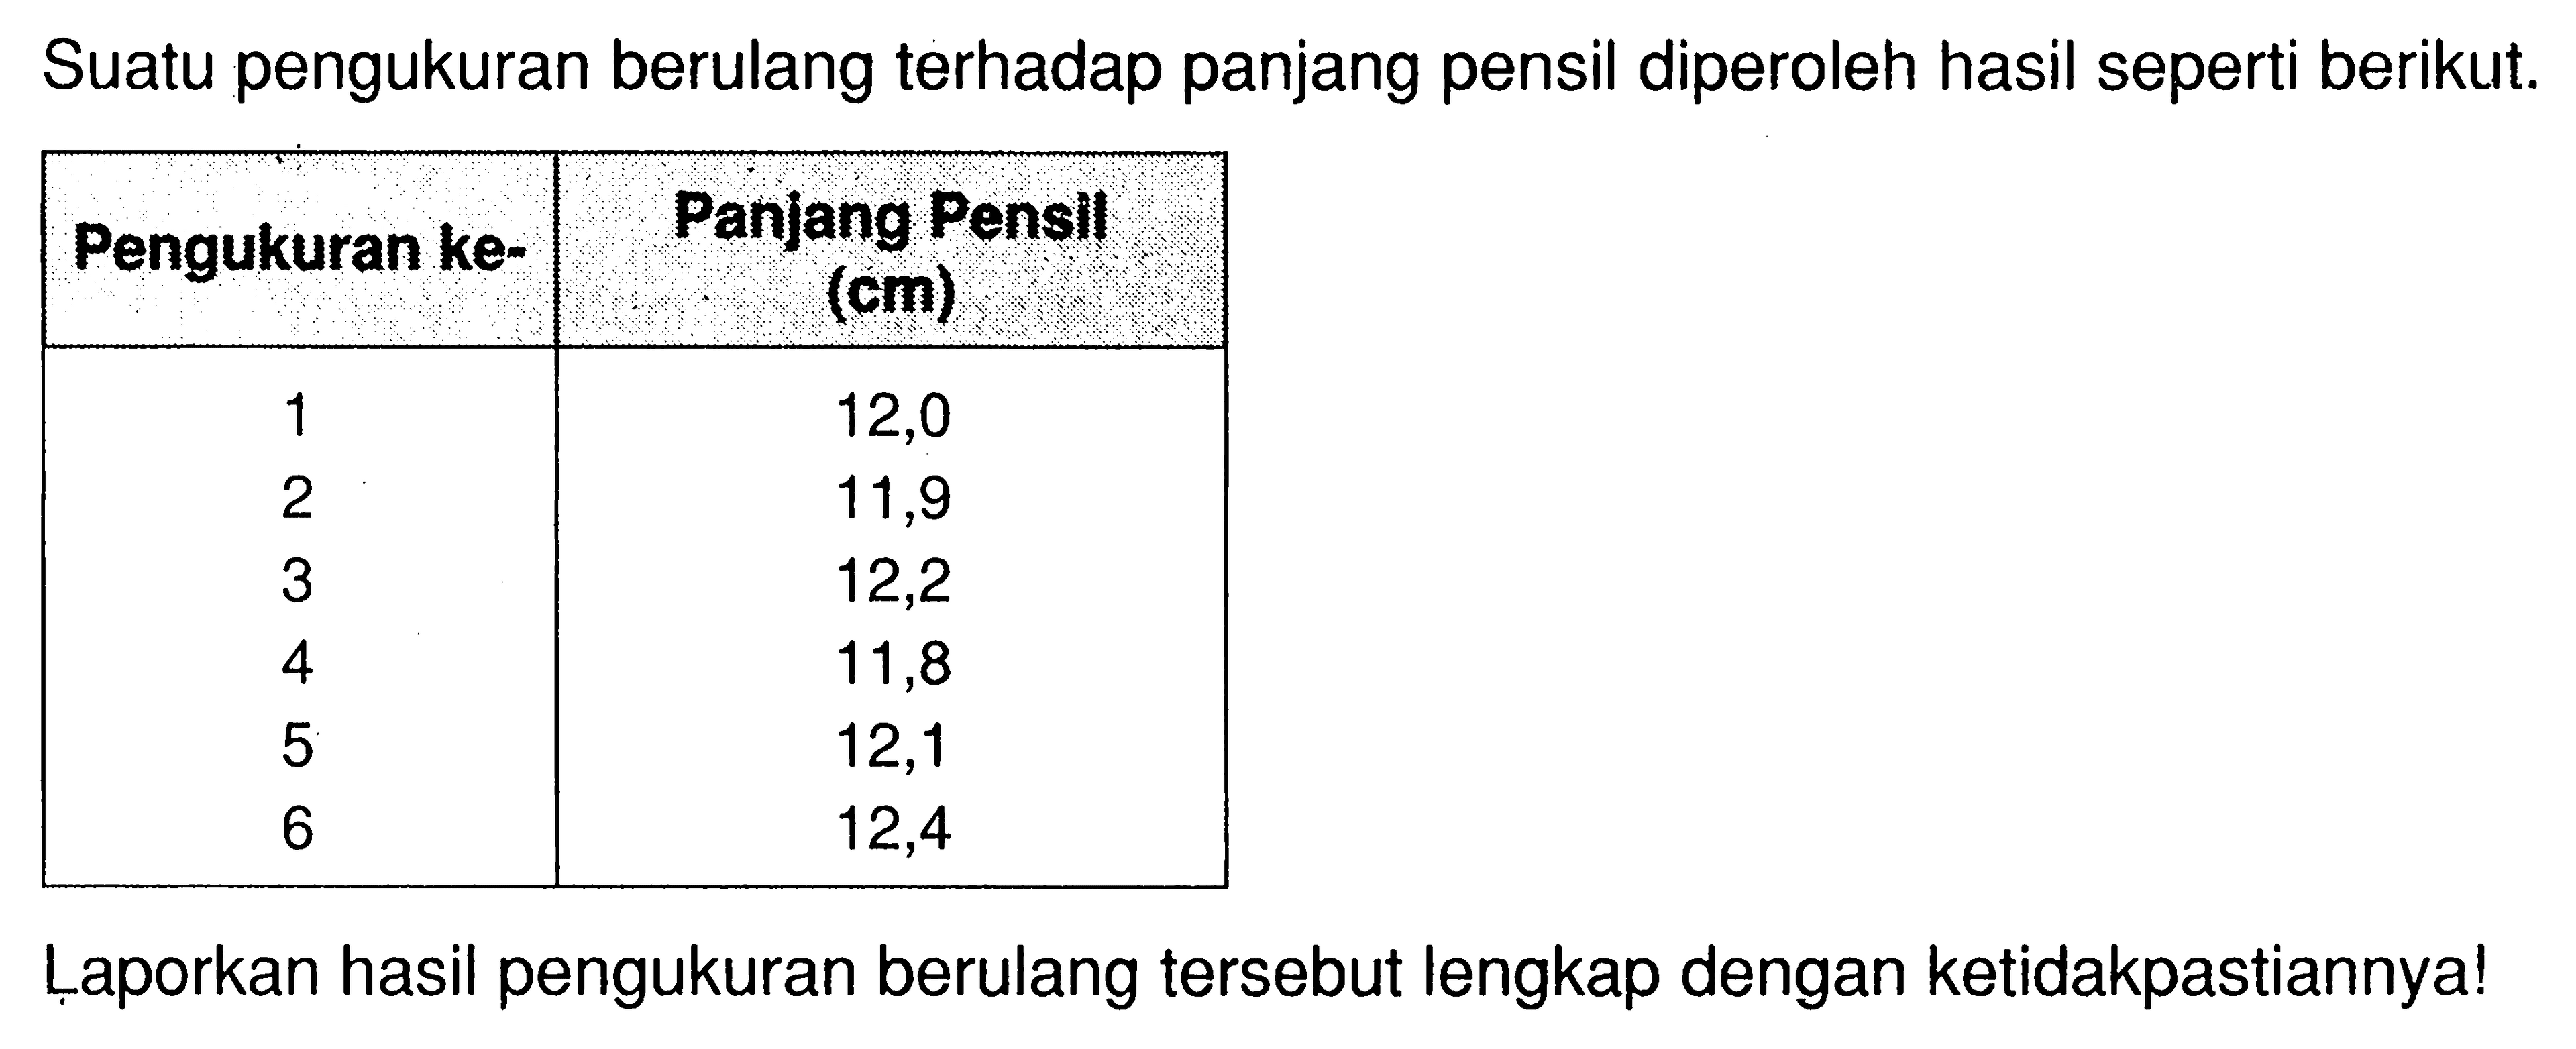 Suatu pengukuran berulang terhadap panjang pensil diperoleh hasil seperti berikut. Pengukuran ke- Panjang Pensil (cm) 1 12,0 2 11,9 3 12,2 4 11,8 5 12,1 6 12,4 Laporkan hasil pengukuran berulang tersebut dengan ketidakpastiannya! 